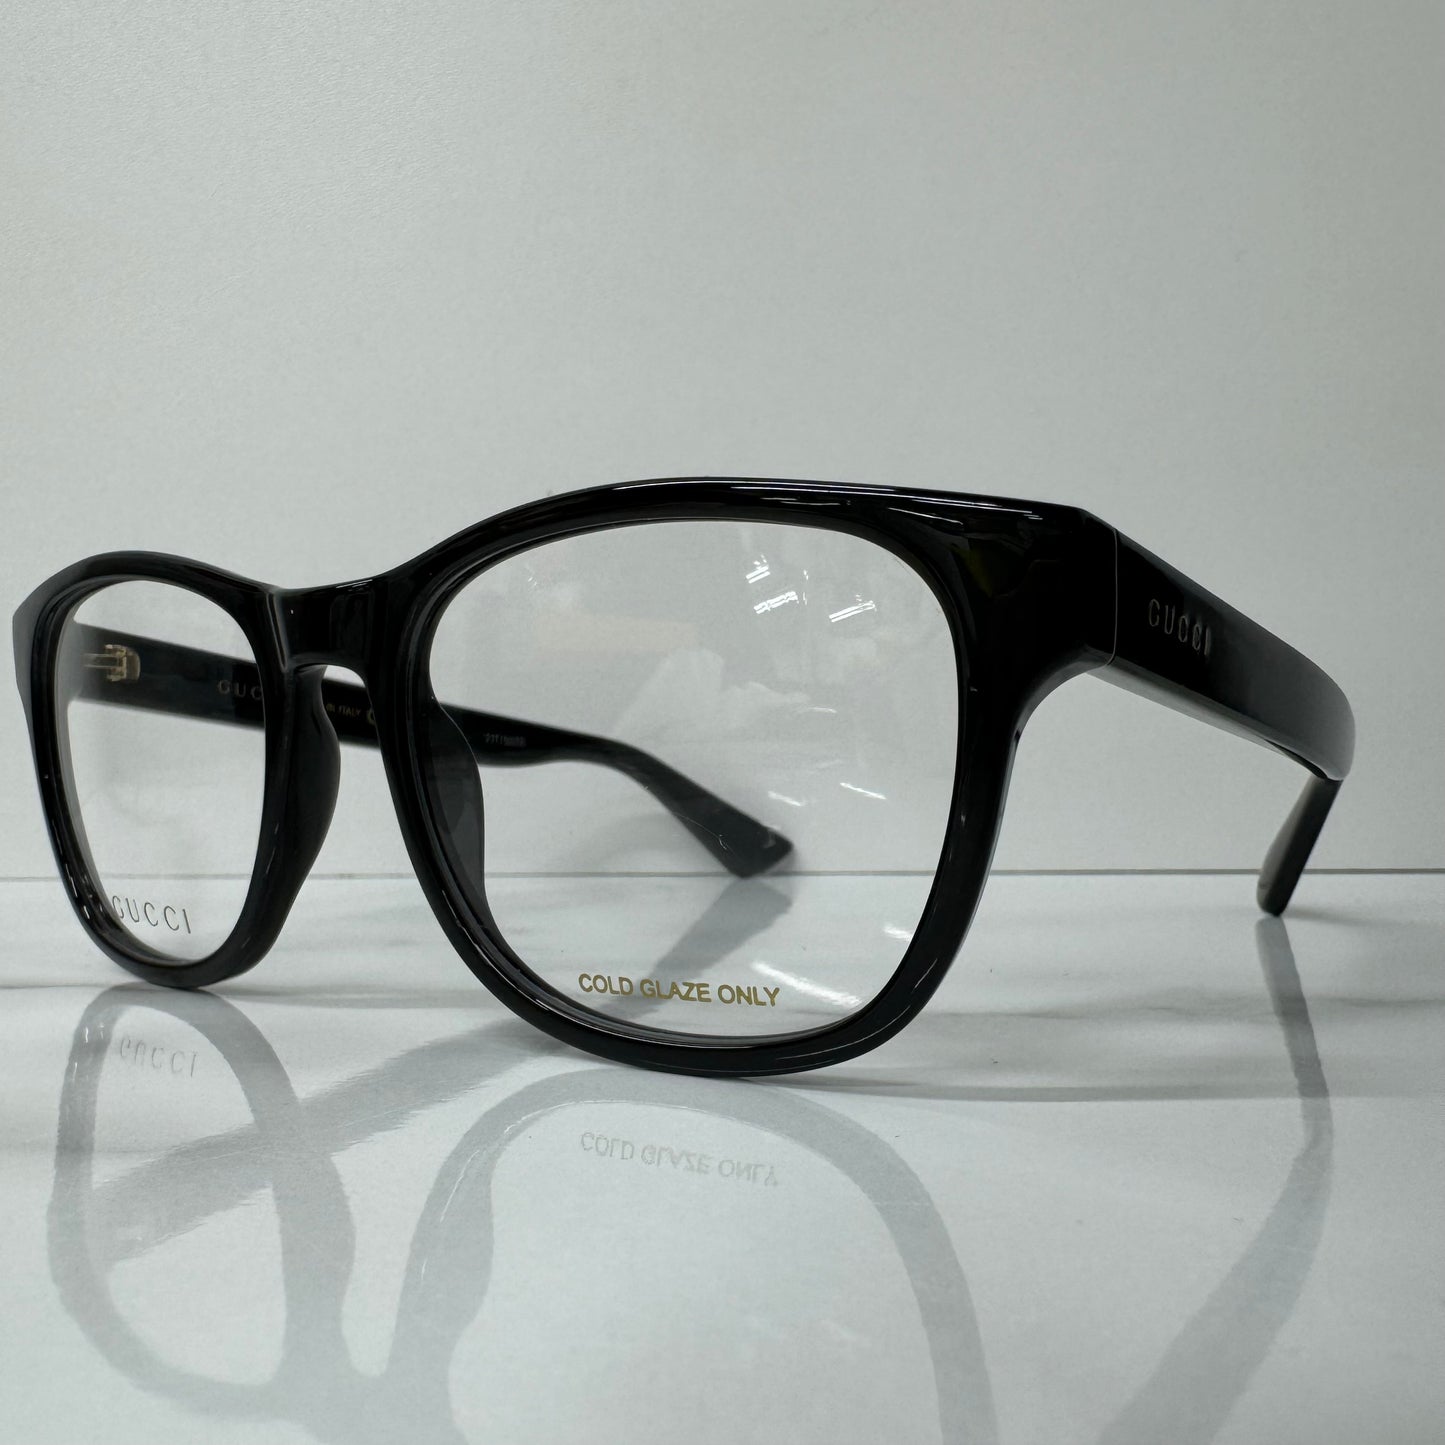 GUCCI Black Round Glasses Frames GG1344O 001 Designer Acetate Eyeglasses